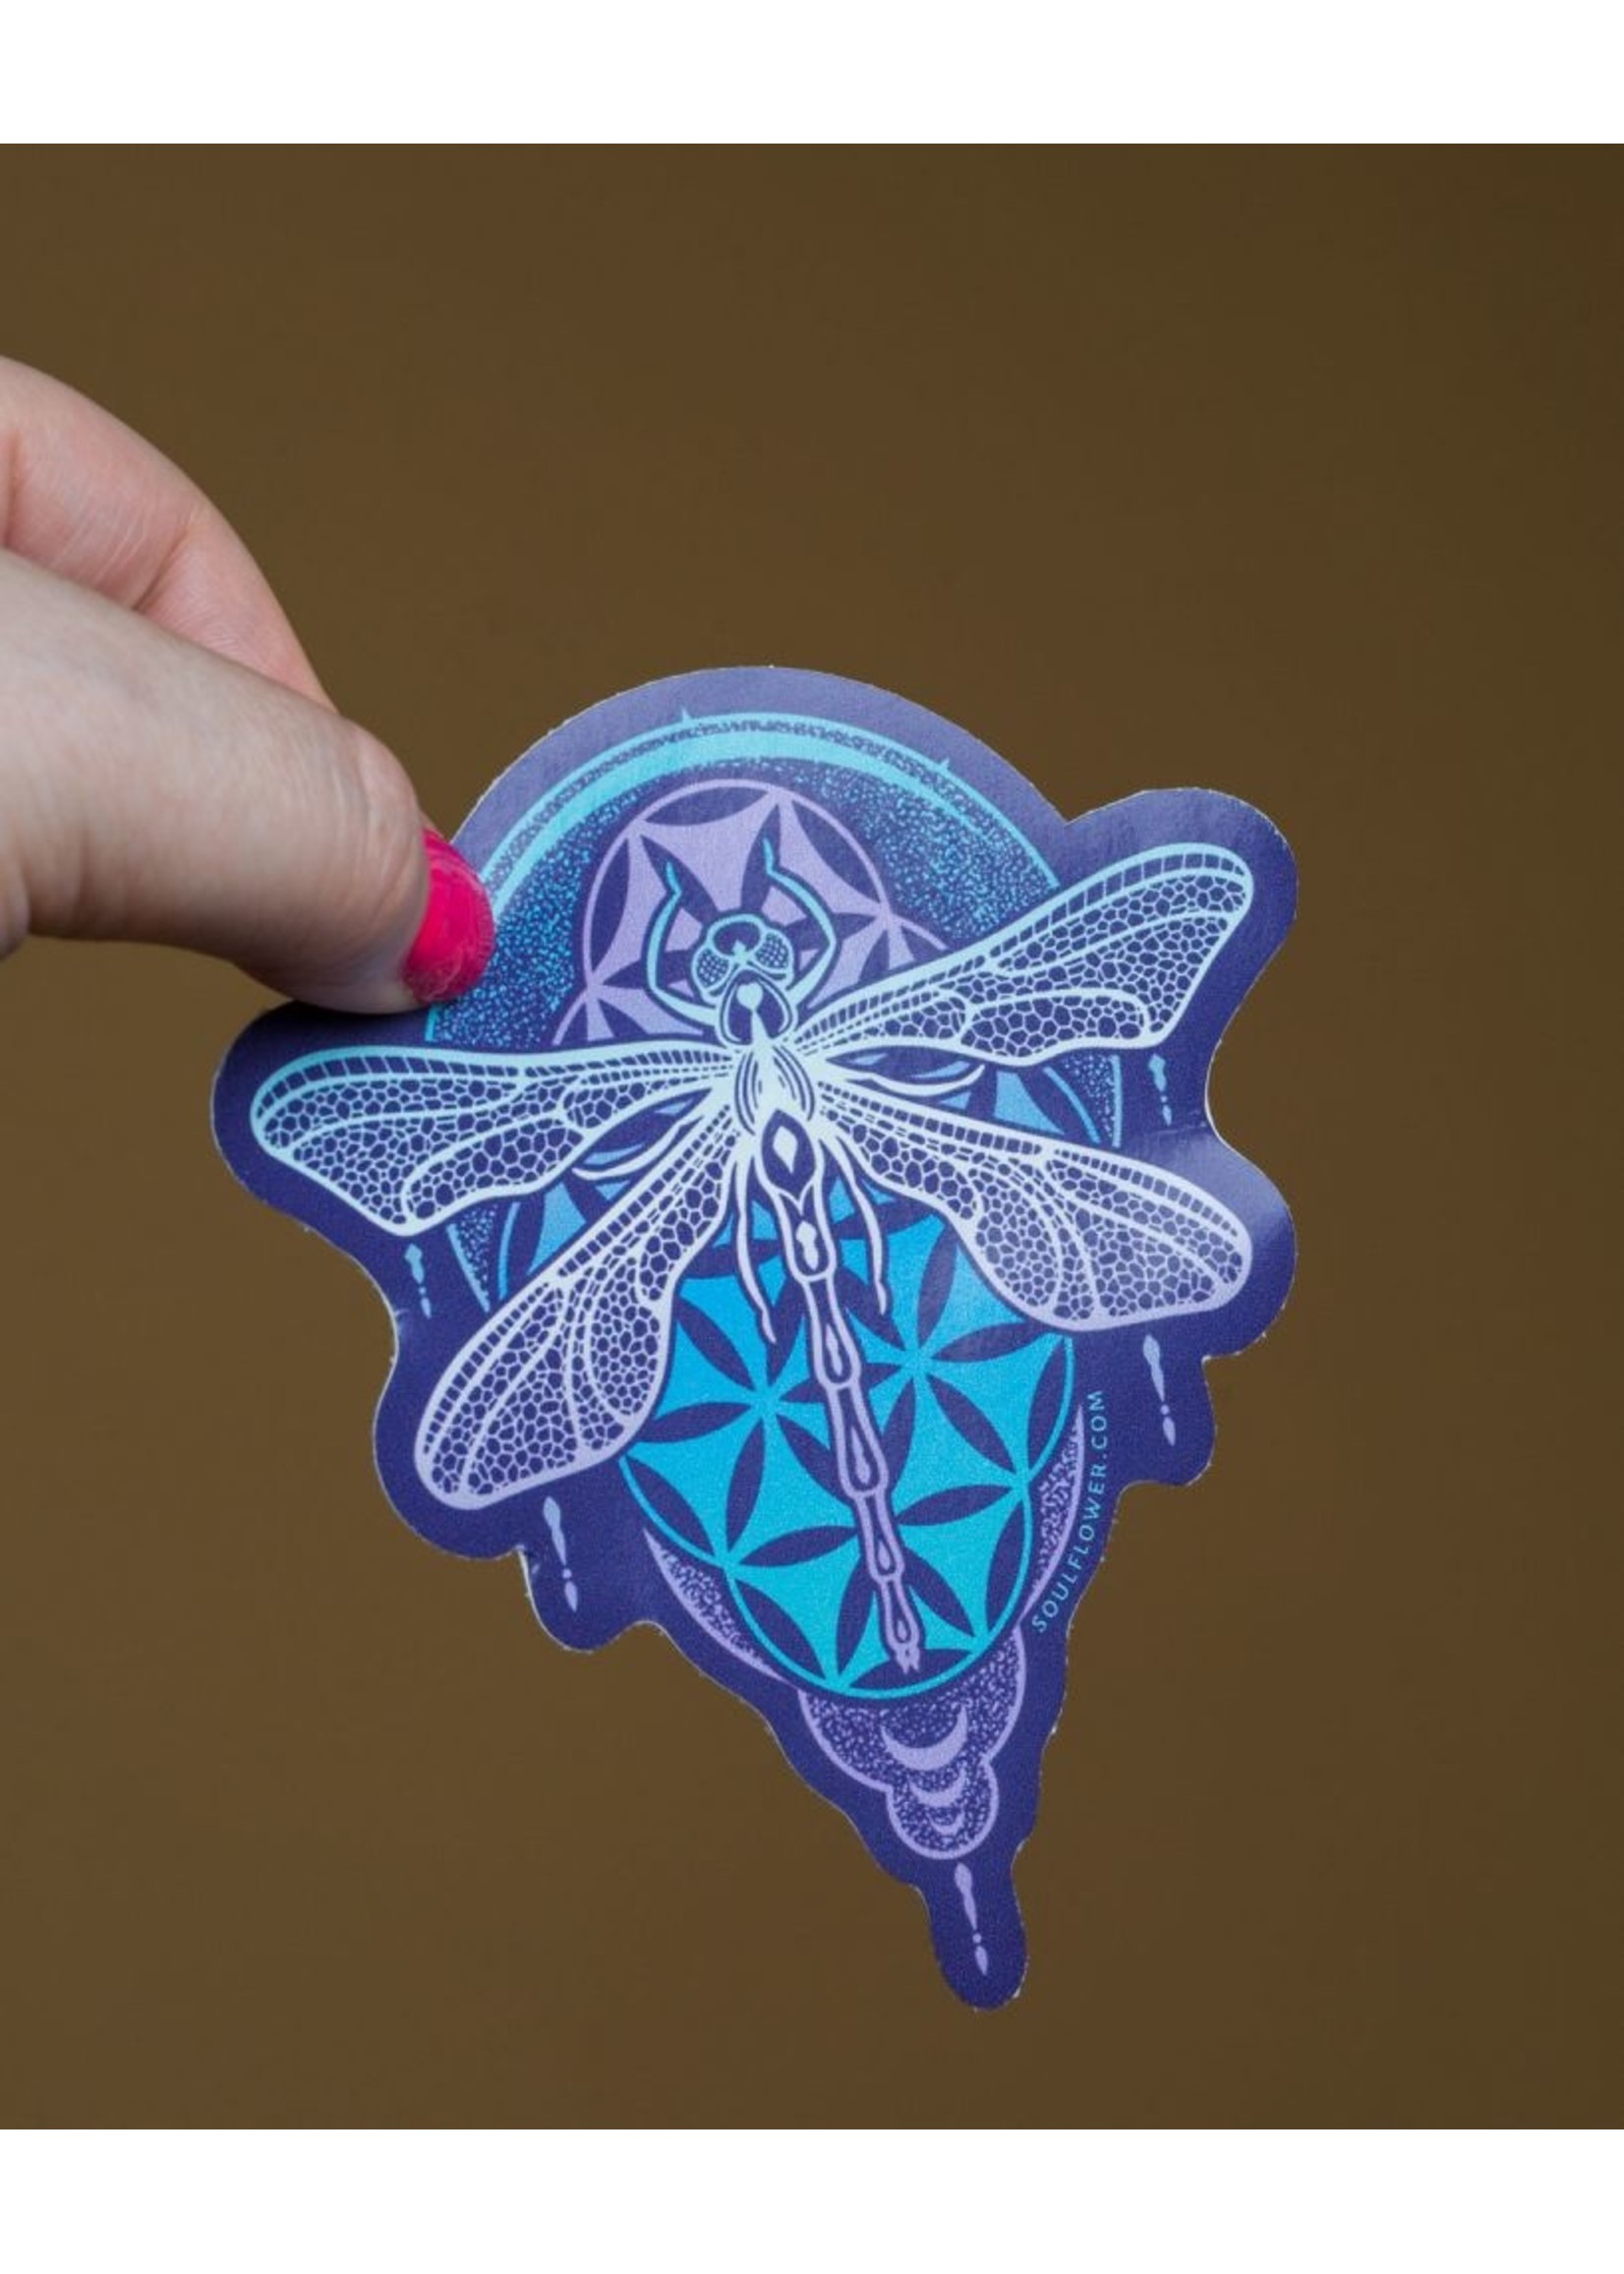 Soul Flower Sticker Dragon Fly Mandala